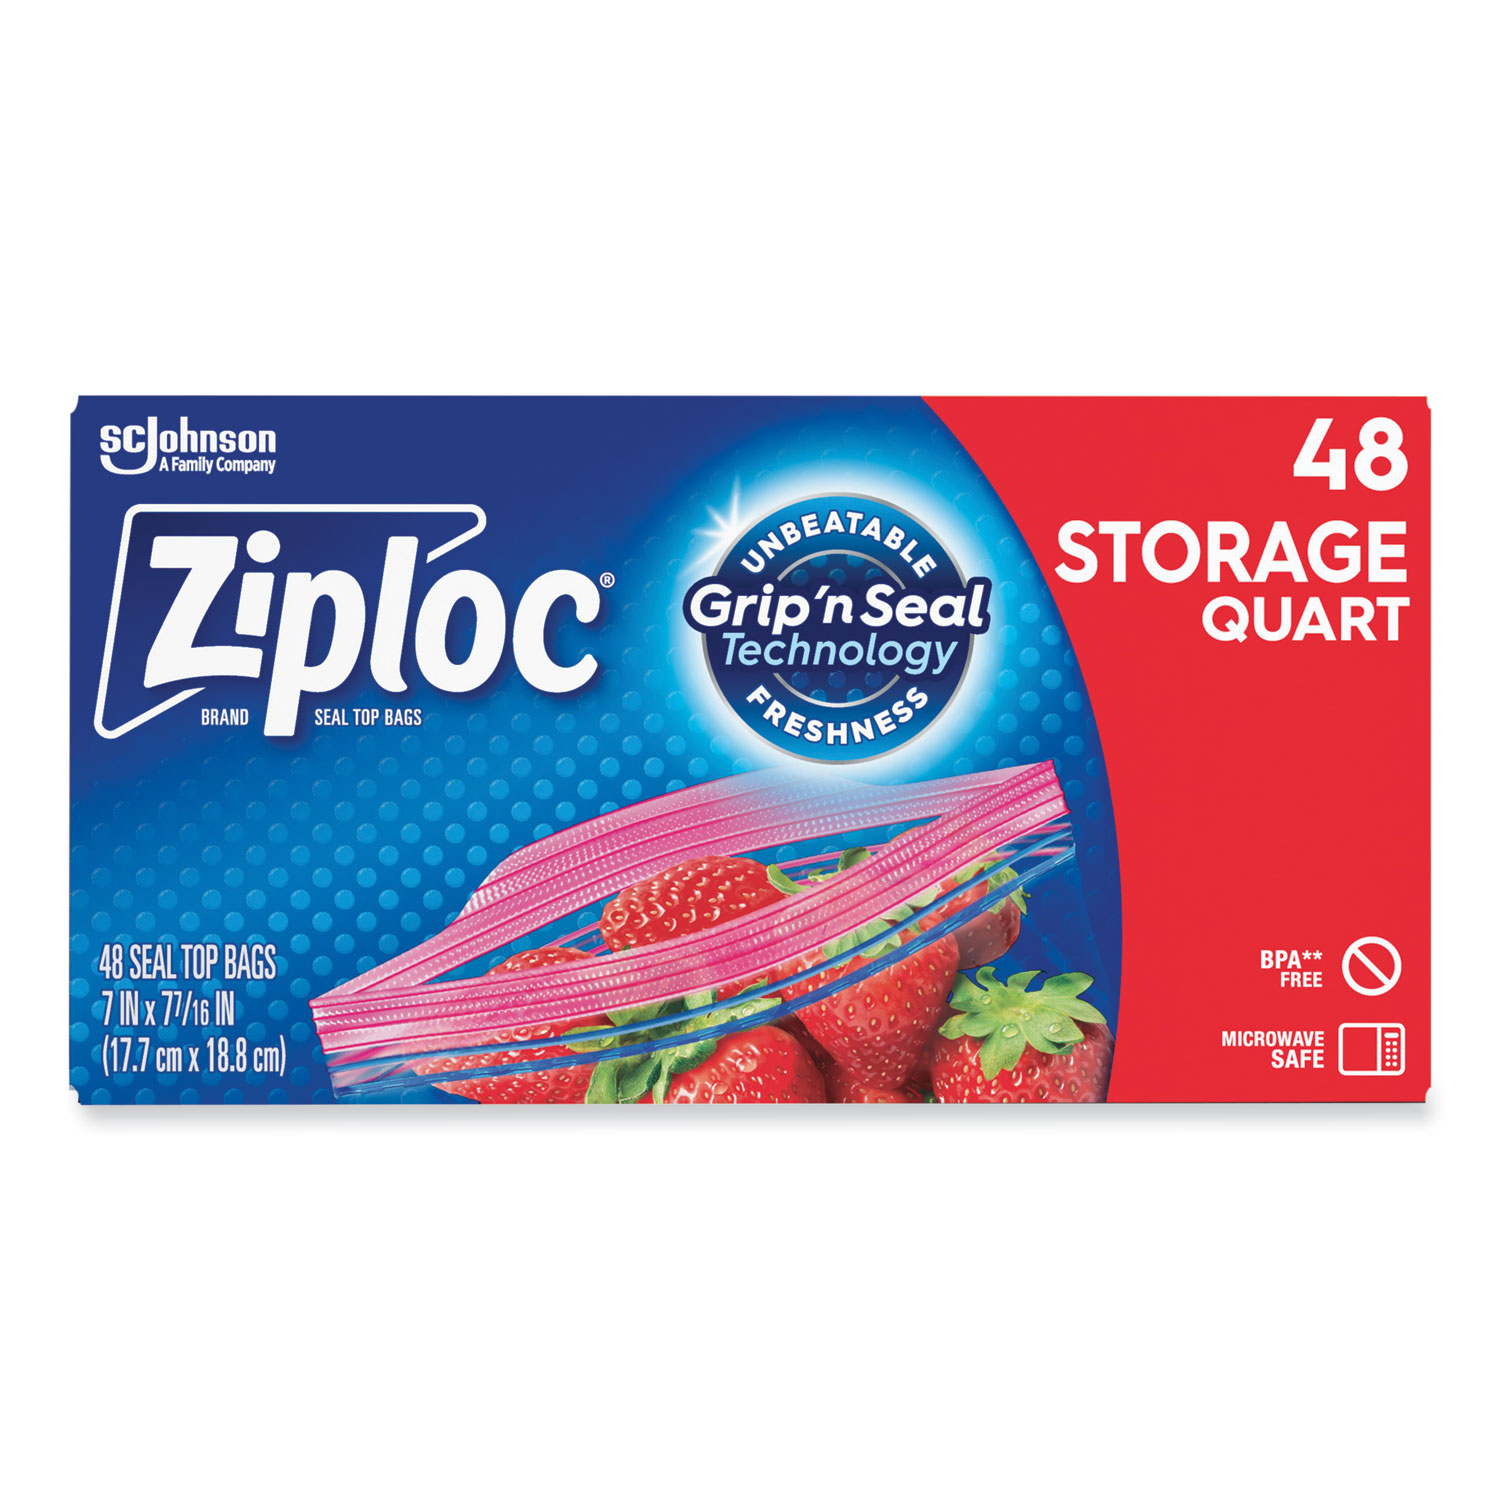 New Ziploc 00388 1 Quart Freezer Bags 20 Pack,Each, Size: One Size